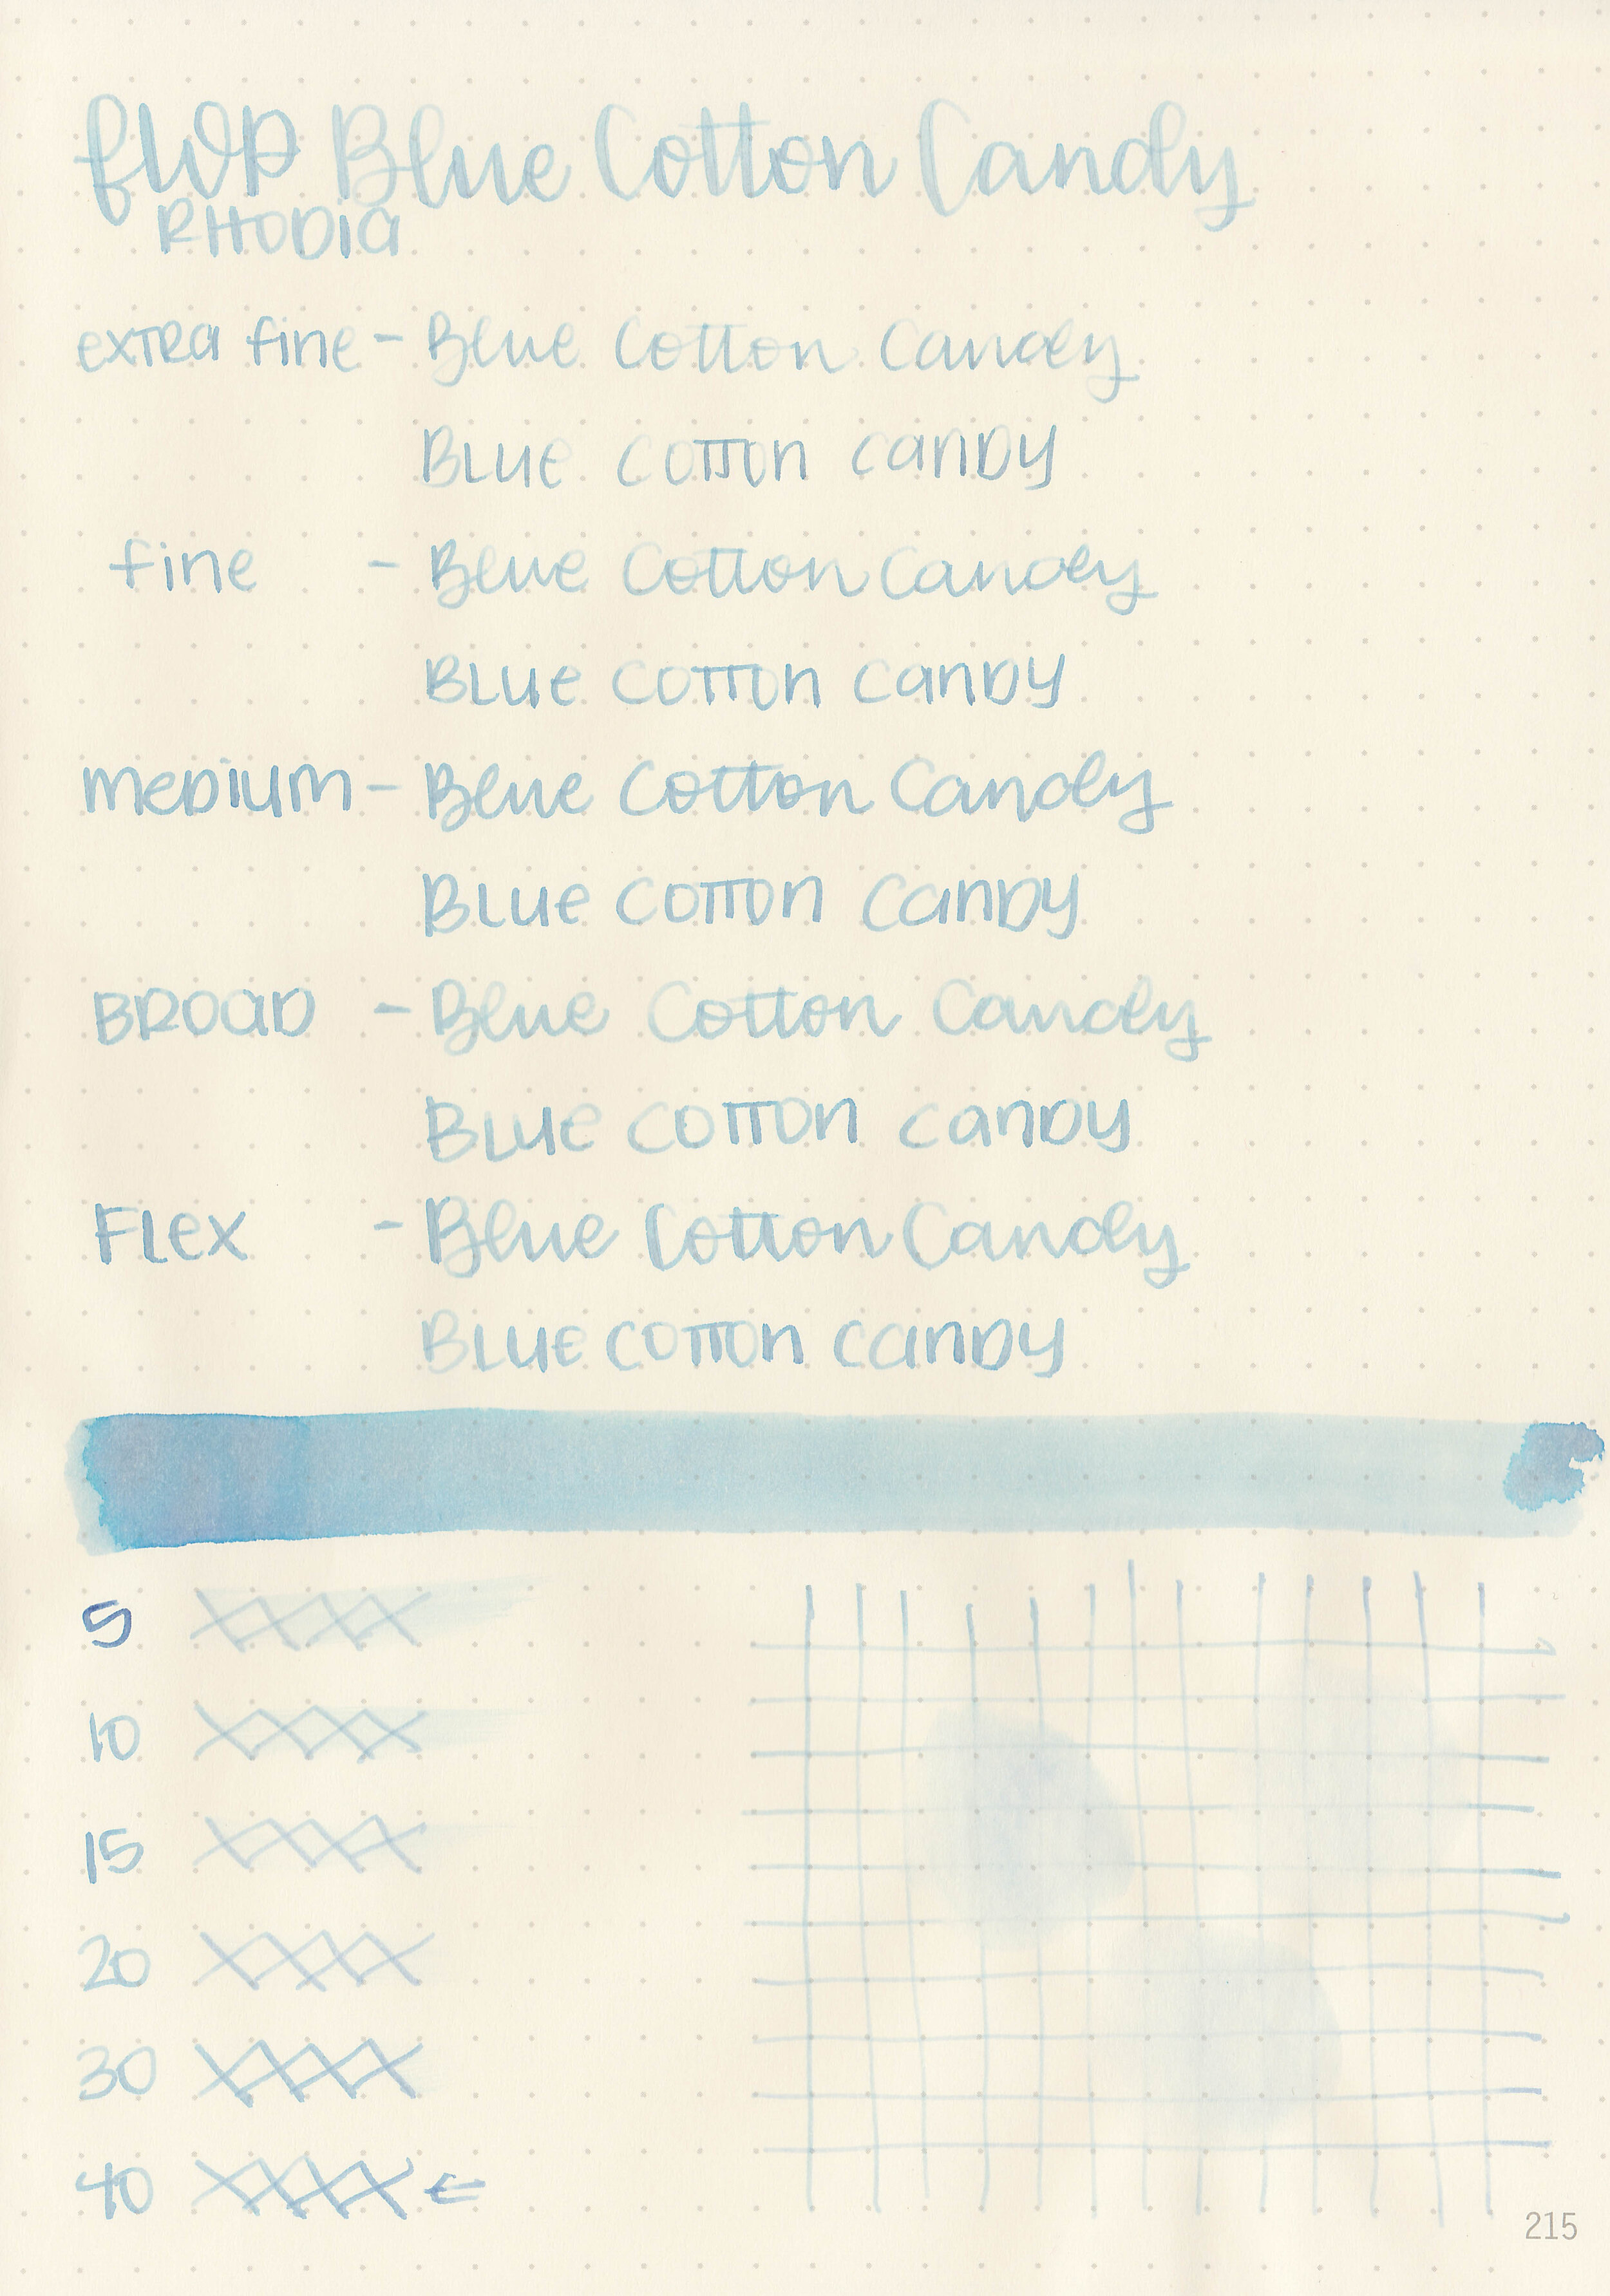 fwp-blue-cotton-candy-5.jpg